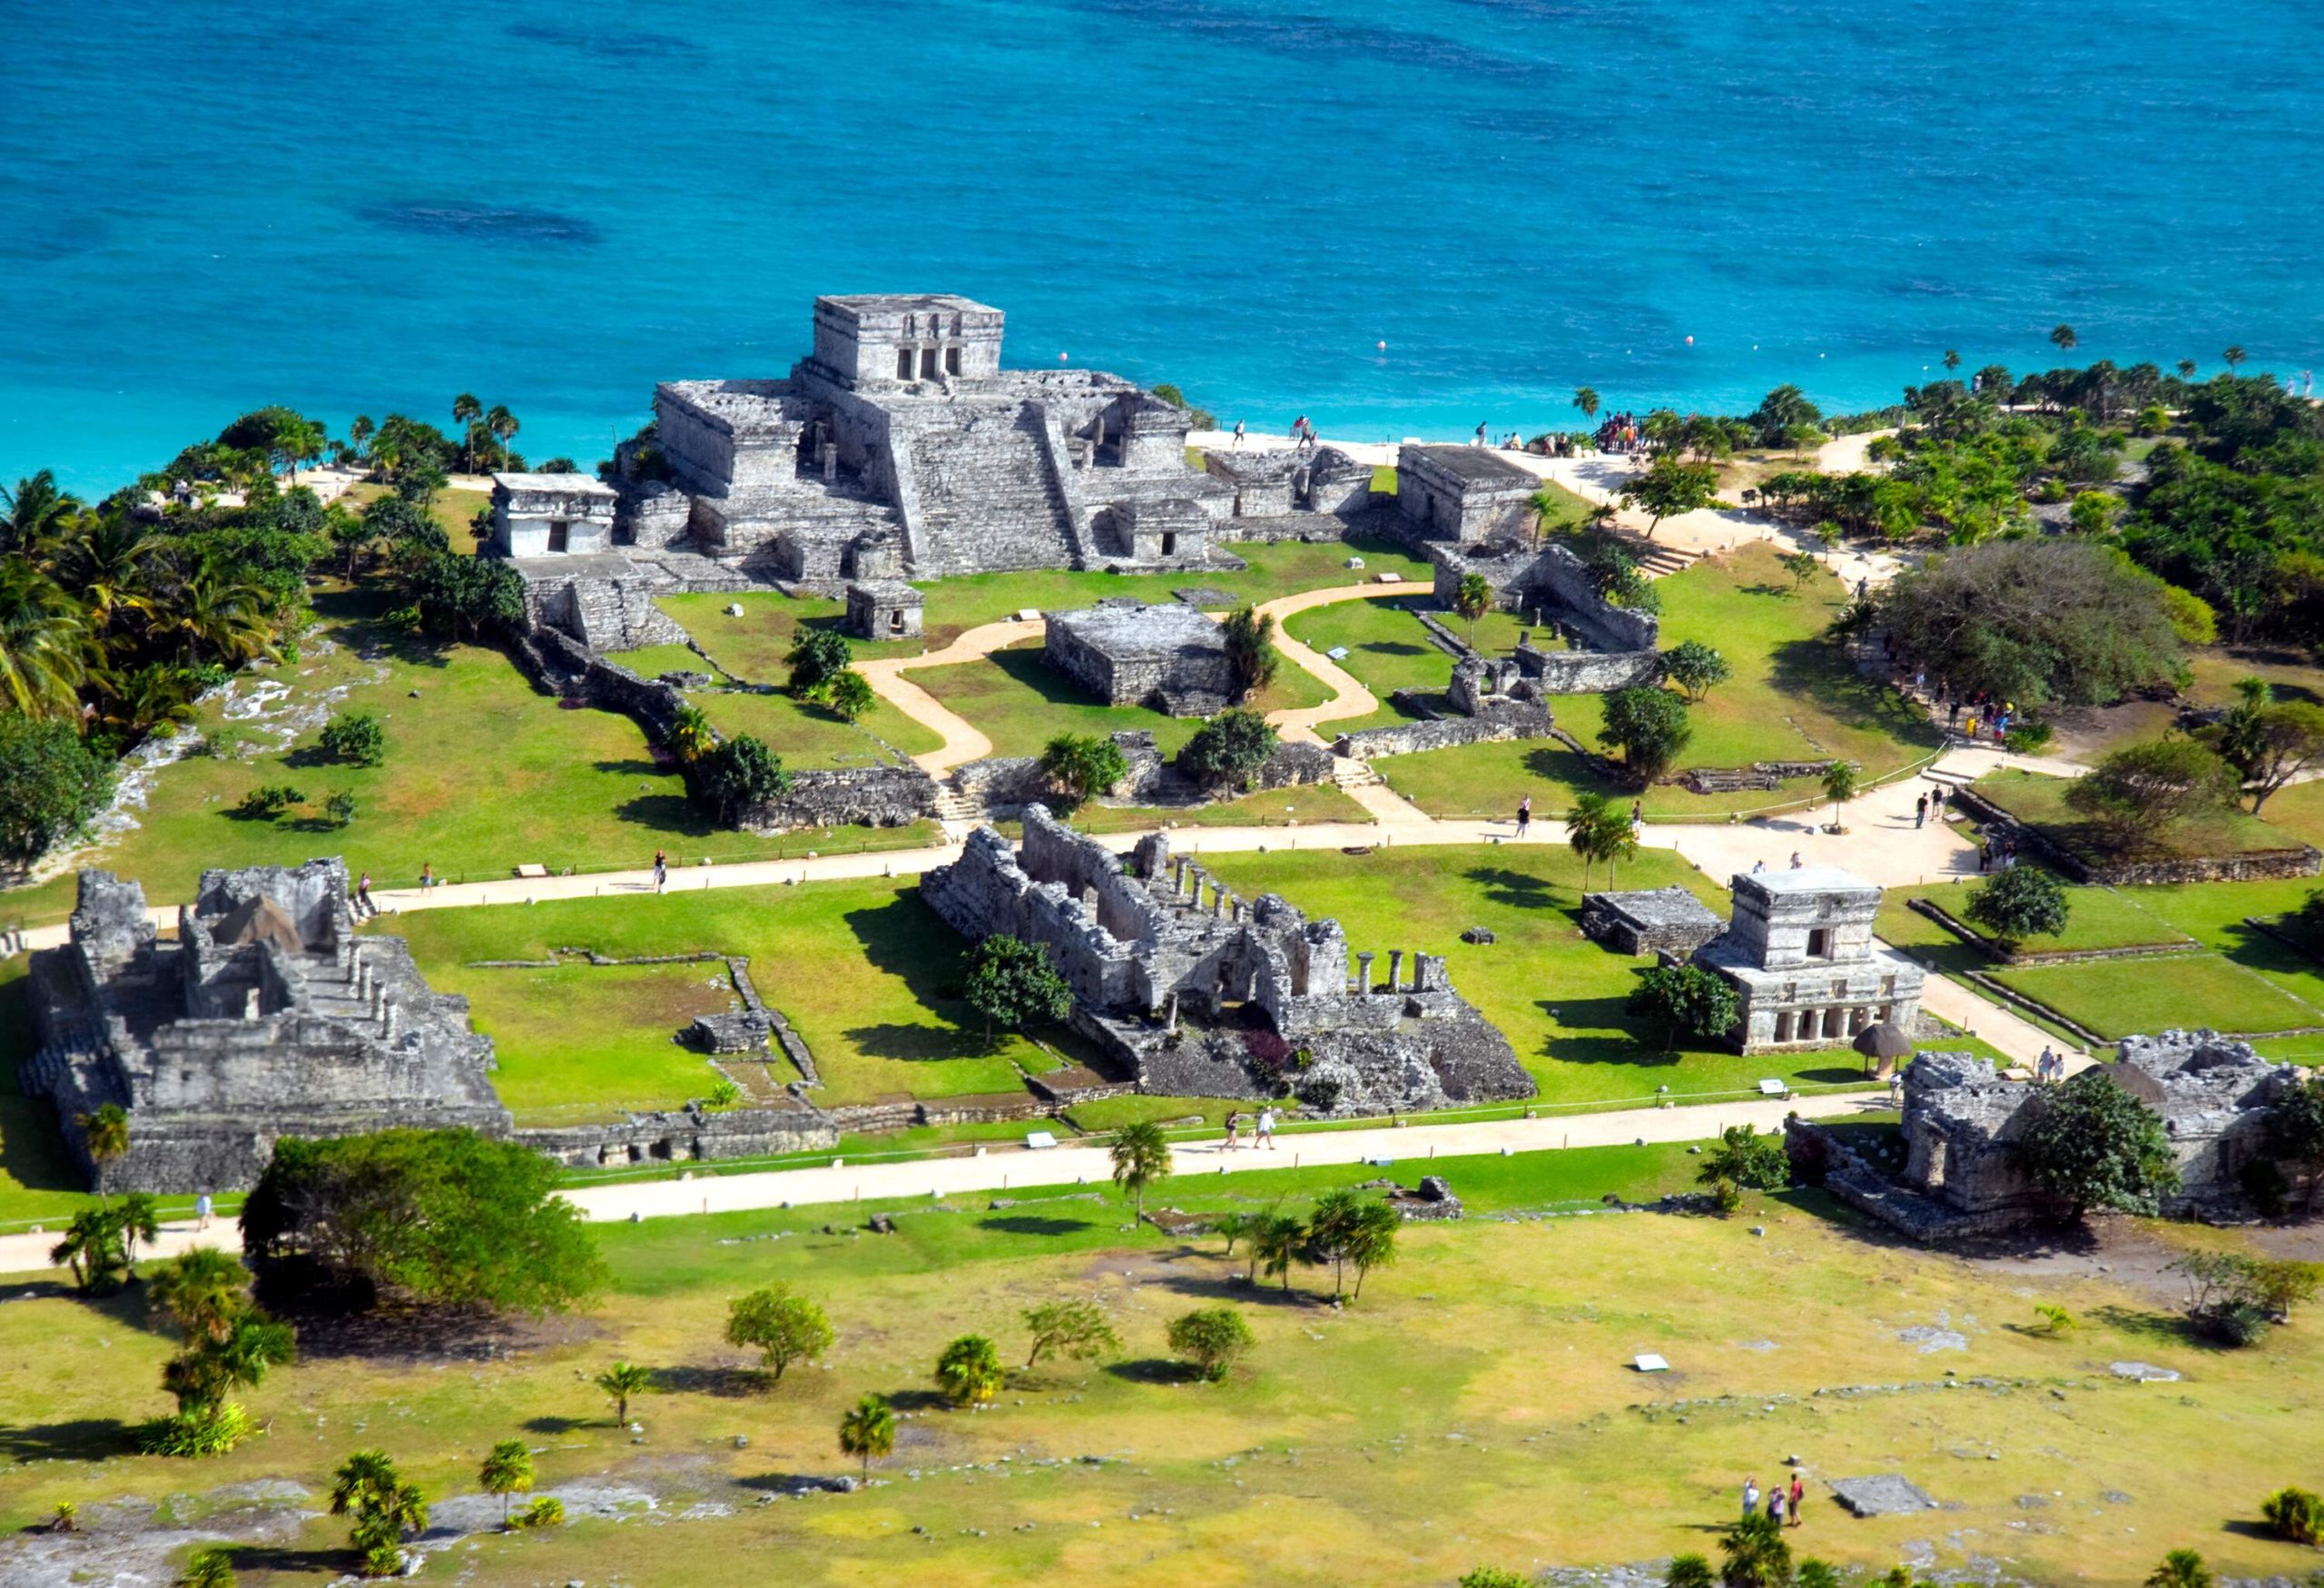 Tulum's Mayan port city ruins on the coast of a beautiful blue sea.